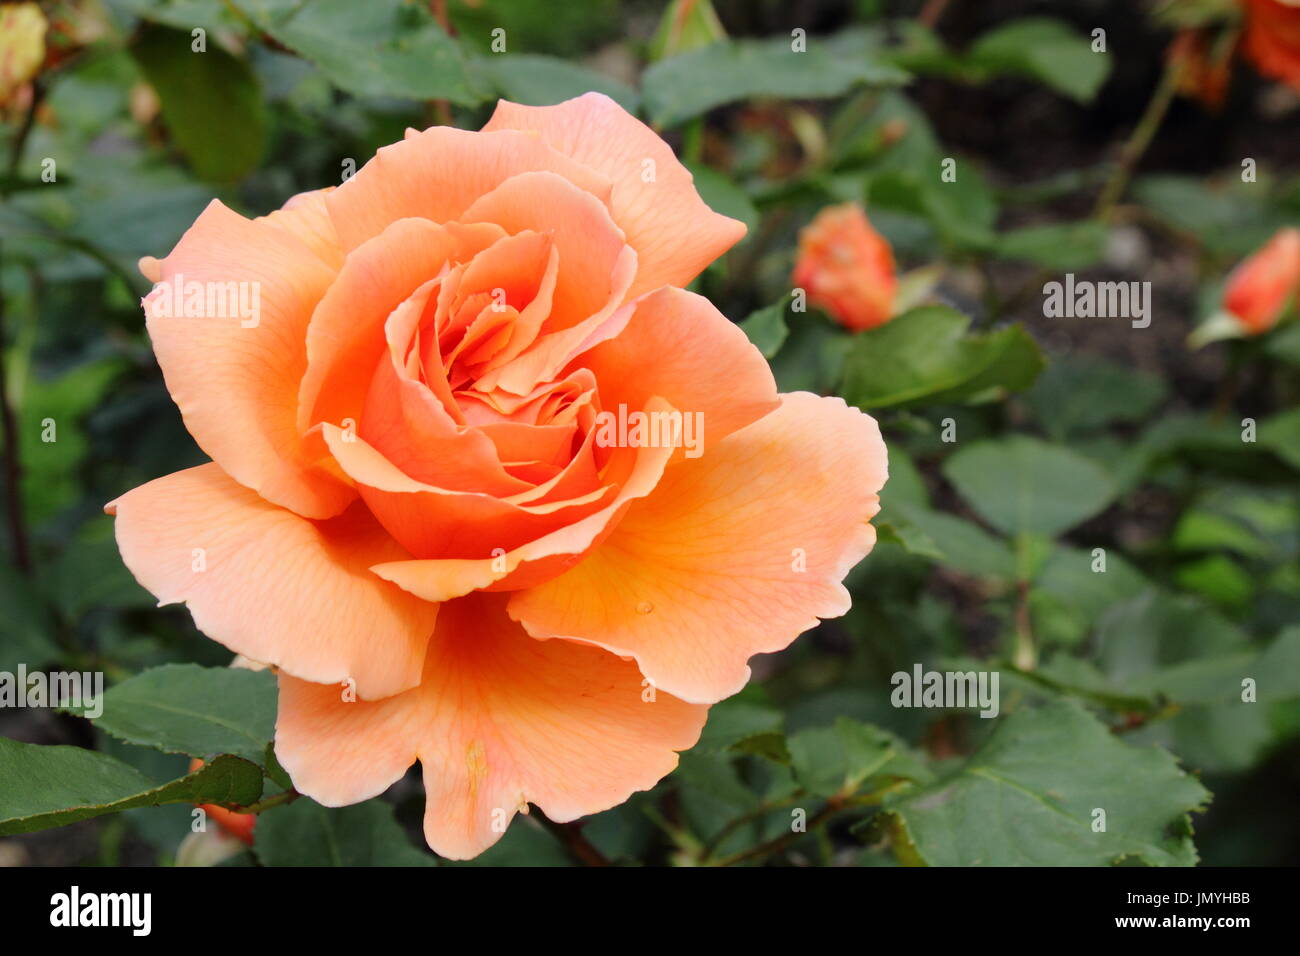 https://c8.alamy.com/comp/JMYHBB/rosa-just-joey-hybrid-tea-rose-in-full-bloom-with-emerging-rosebud-JMYHBB.jpg